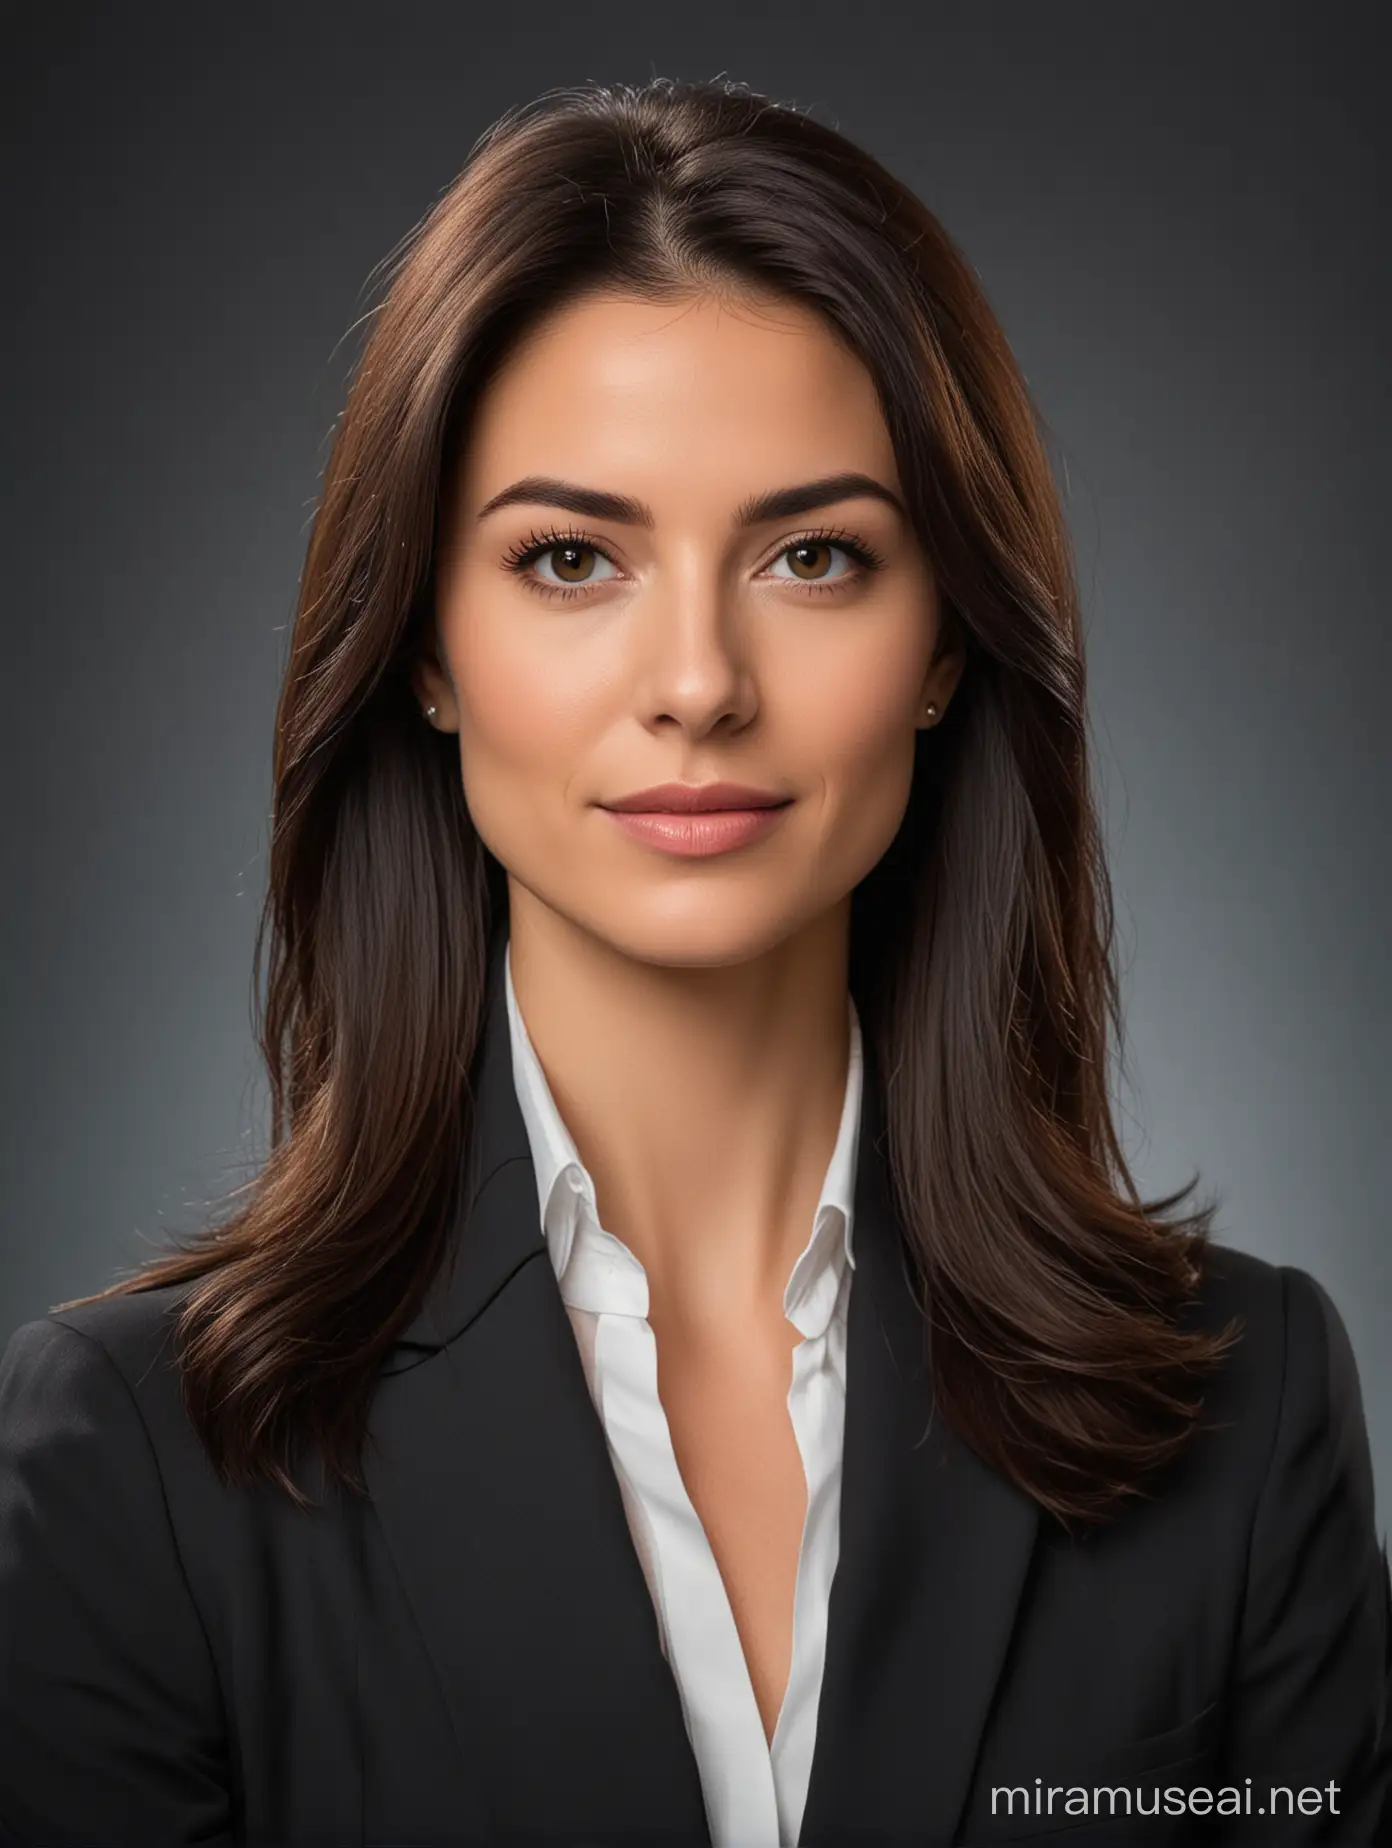 professional studio photo woman lawyer dark straight hair